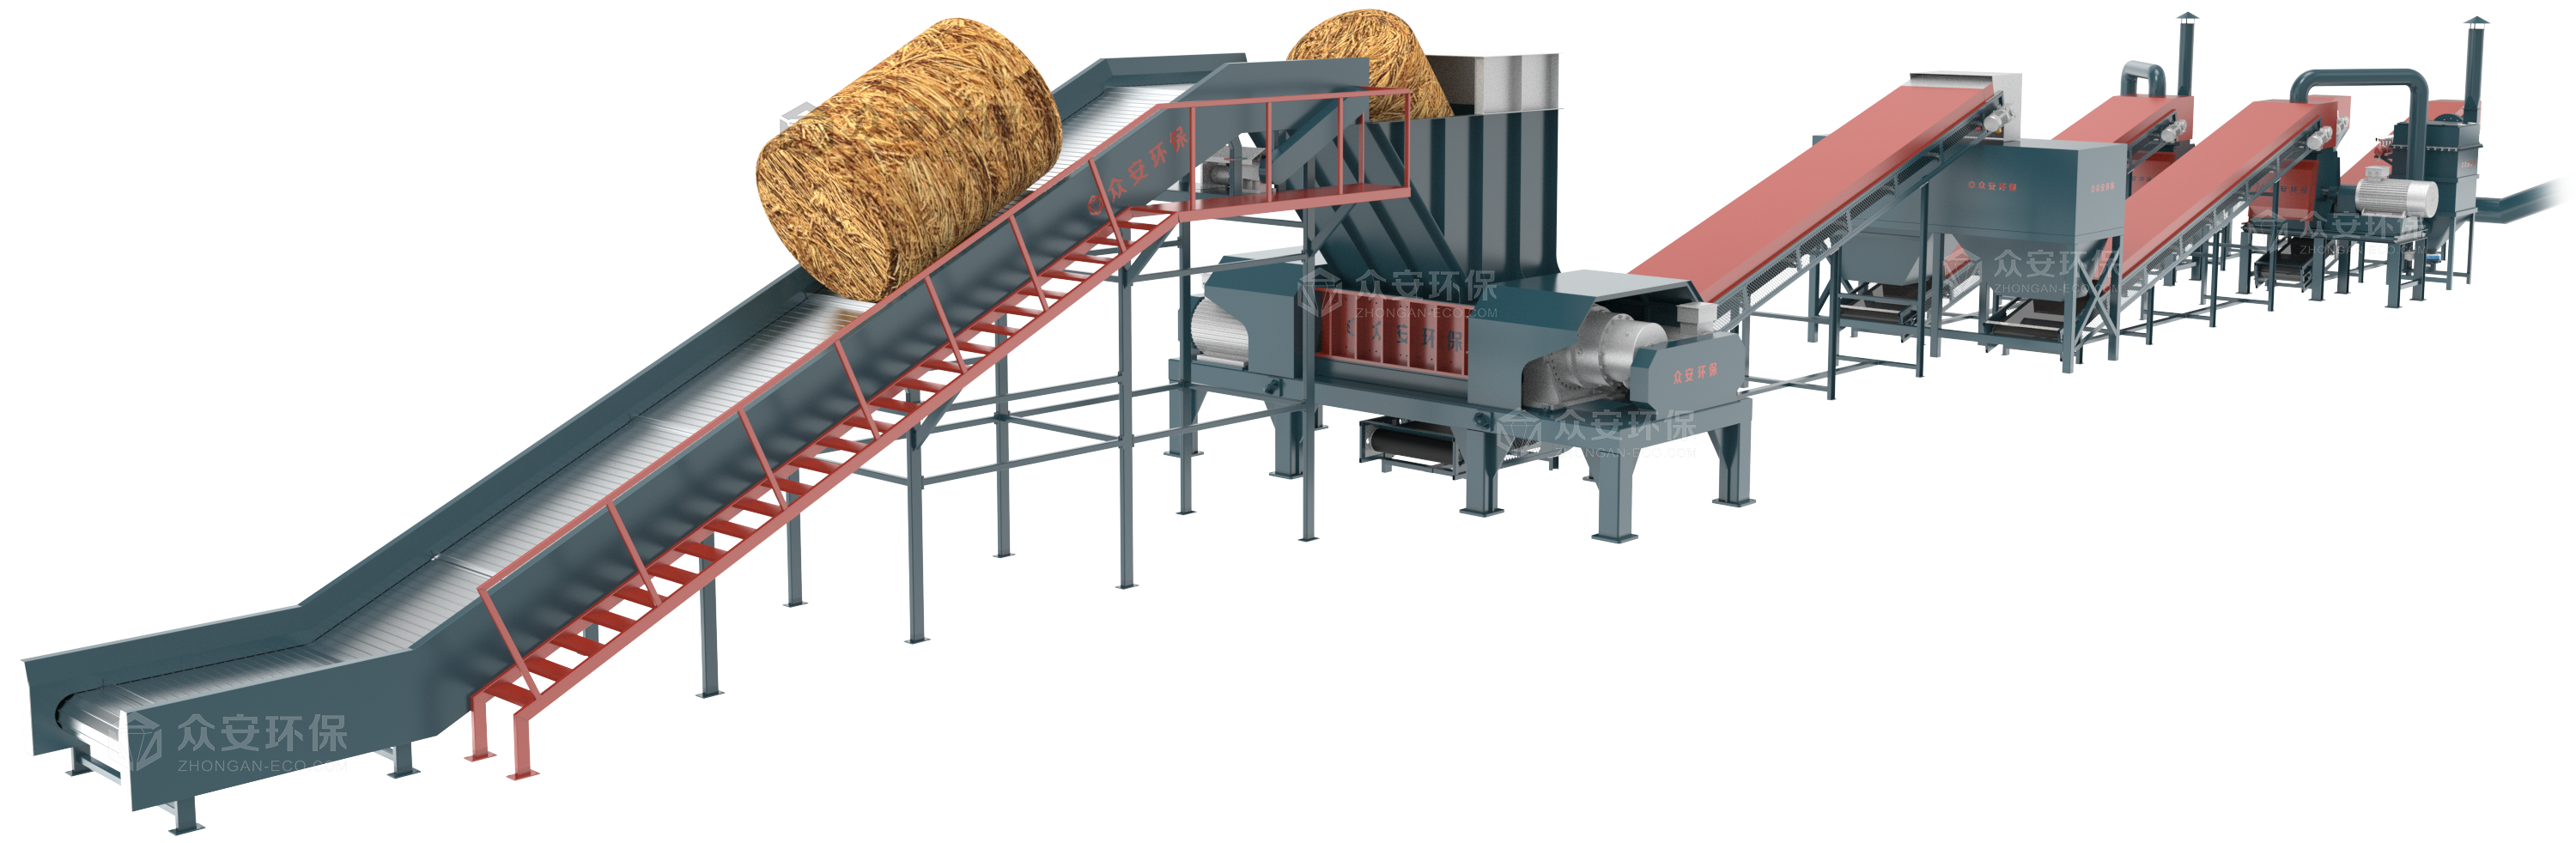 Biomass Shredding System for Power Plant